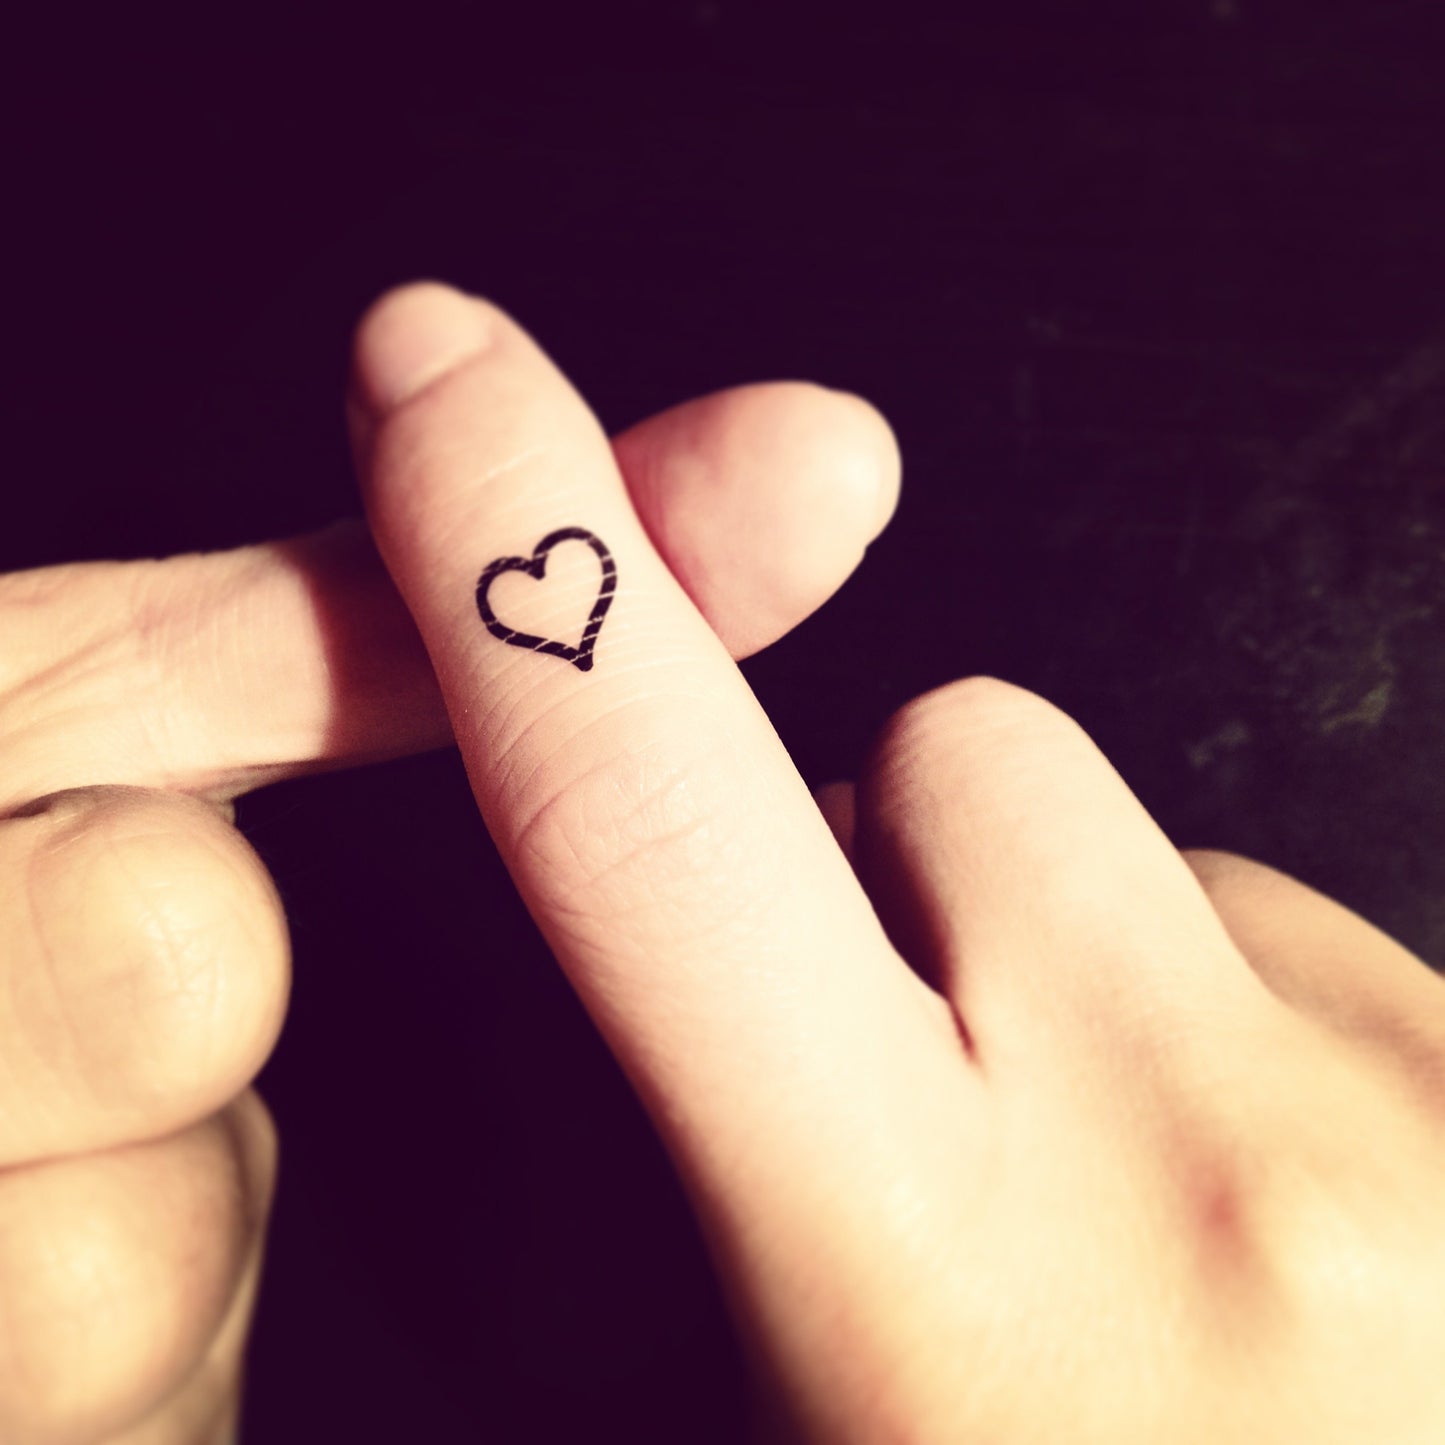 fake tiny small heart outline amanda bynes minimalist temporary tattoo sticker design idea on finger